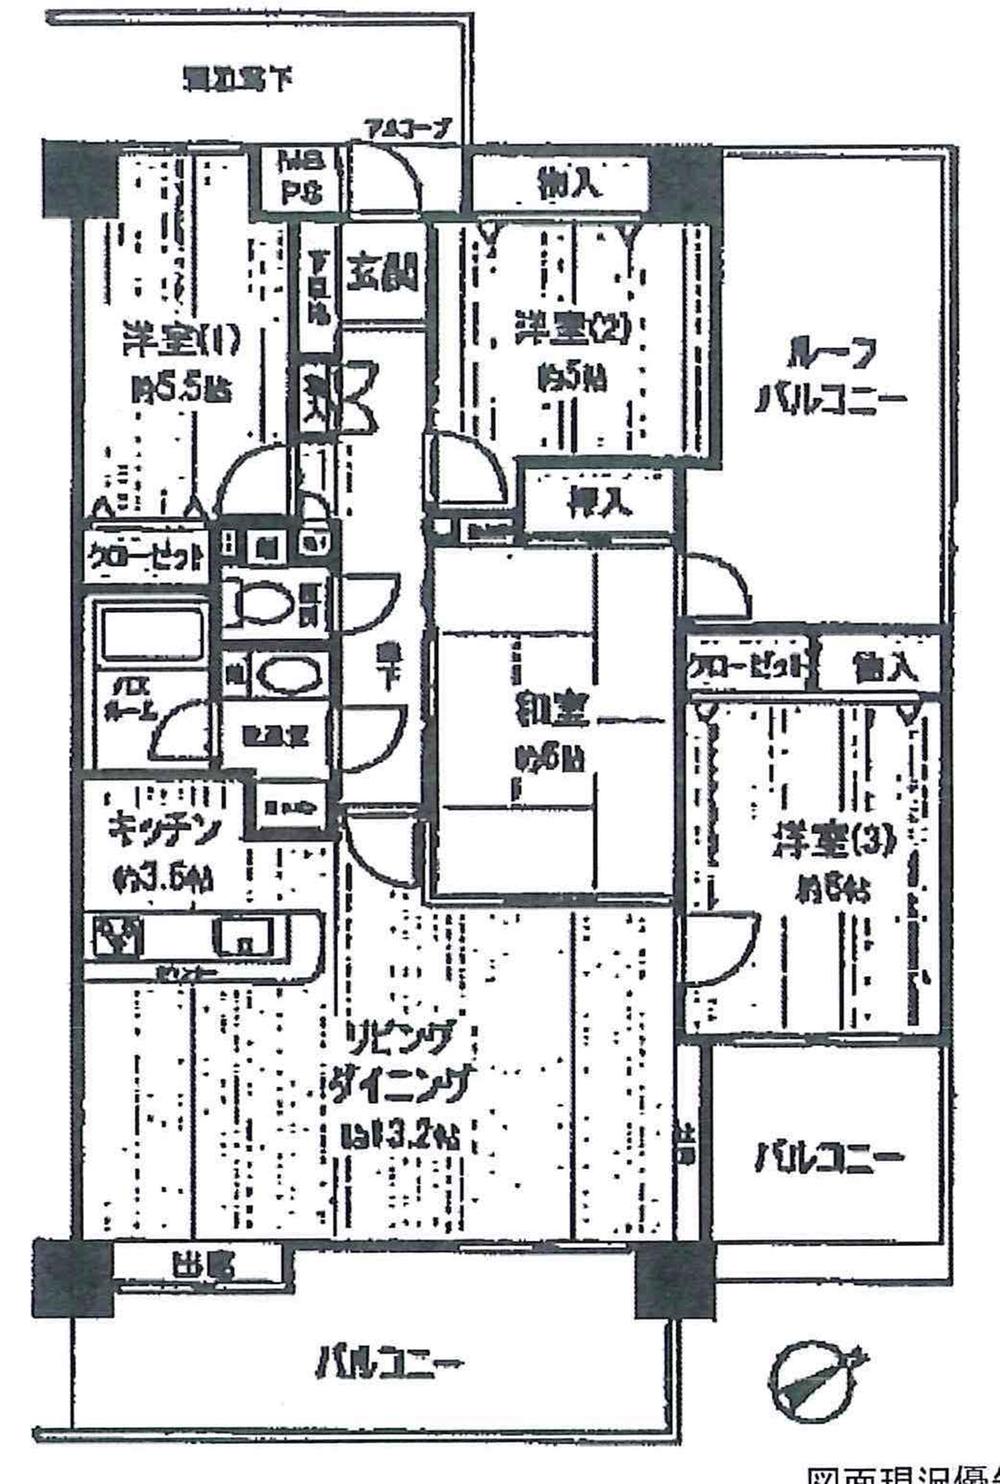 Floor plan. 4LDK, Price 17.8 million yen, Occupied area 85.65 sq m , Balcony area 12.8 sq m